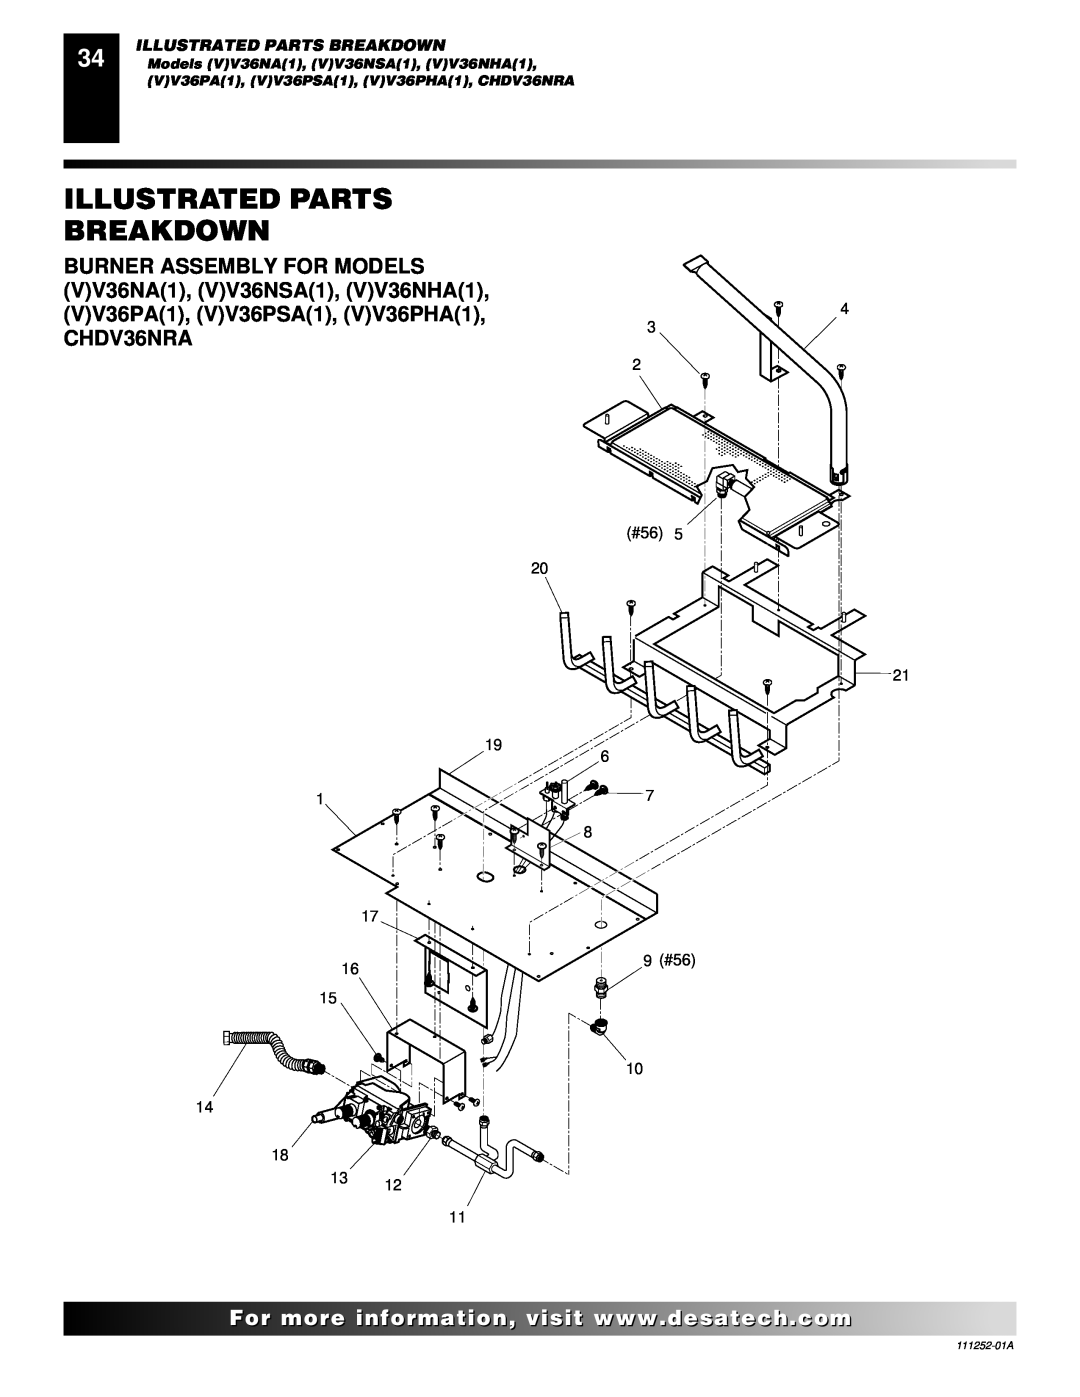 Desa CHDV36NRA installation manual Illustrated Parts Breakdown, 20 19 1 17 16 15, 4 3 2 #56 21 6 7 8 9#56, 111252-01A 